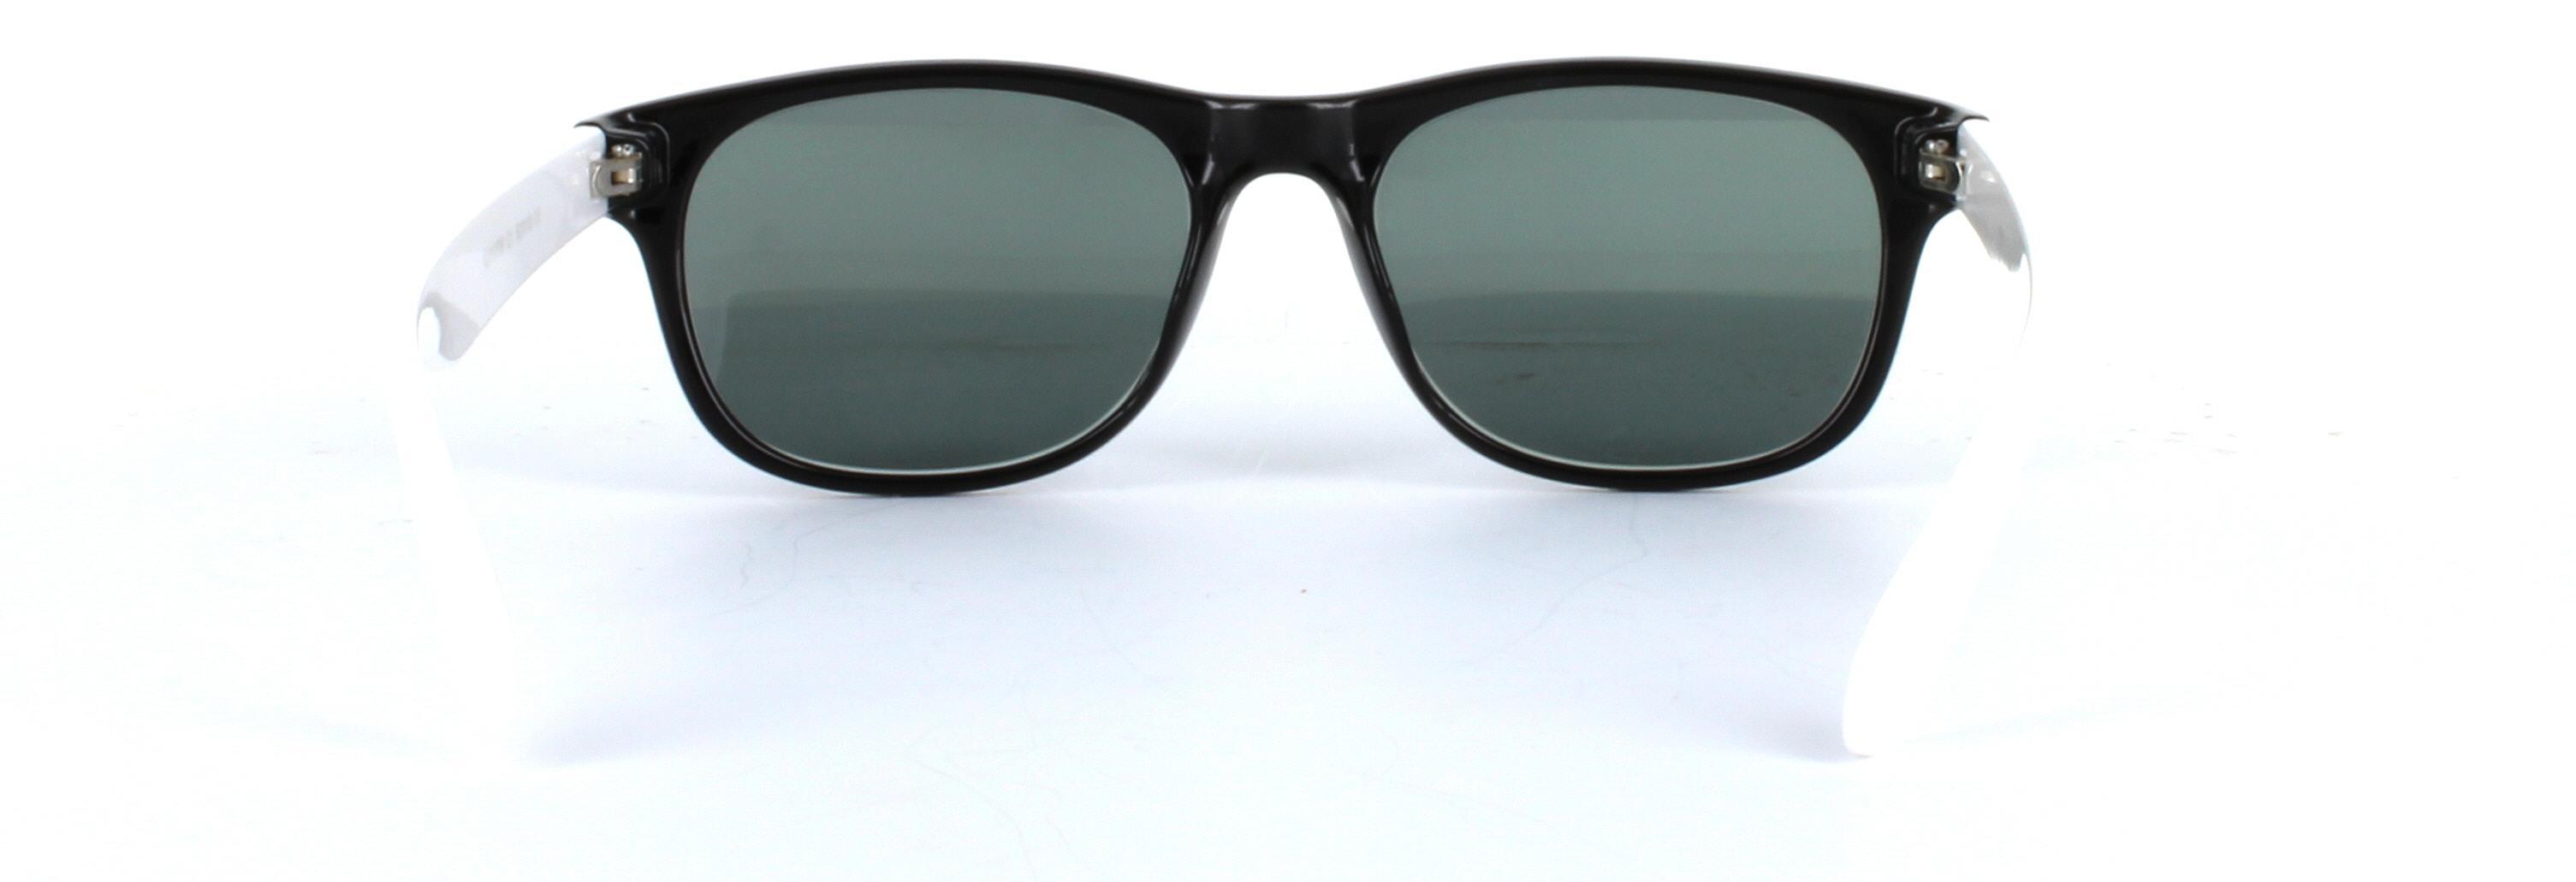 Brazil Black and White Full Rim Oval Plastic Sunglasses - Image View 3